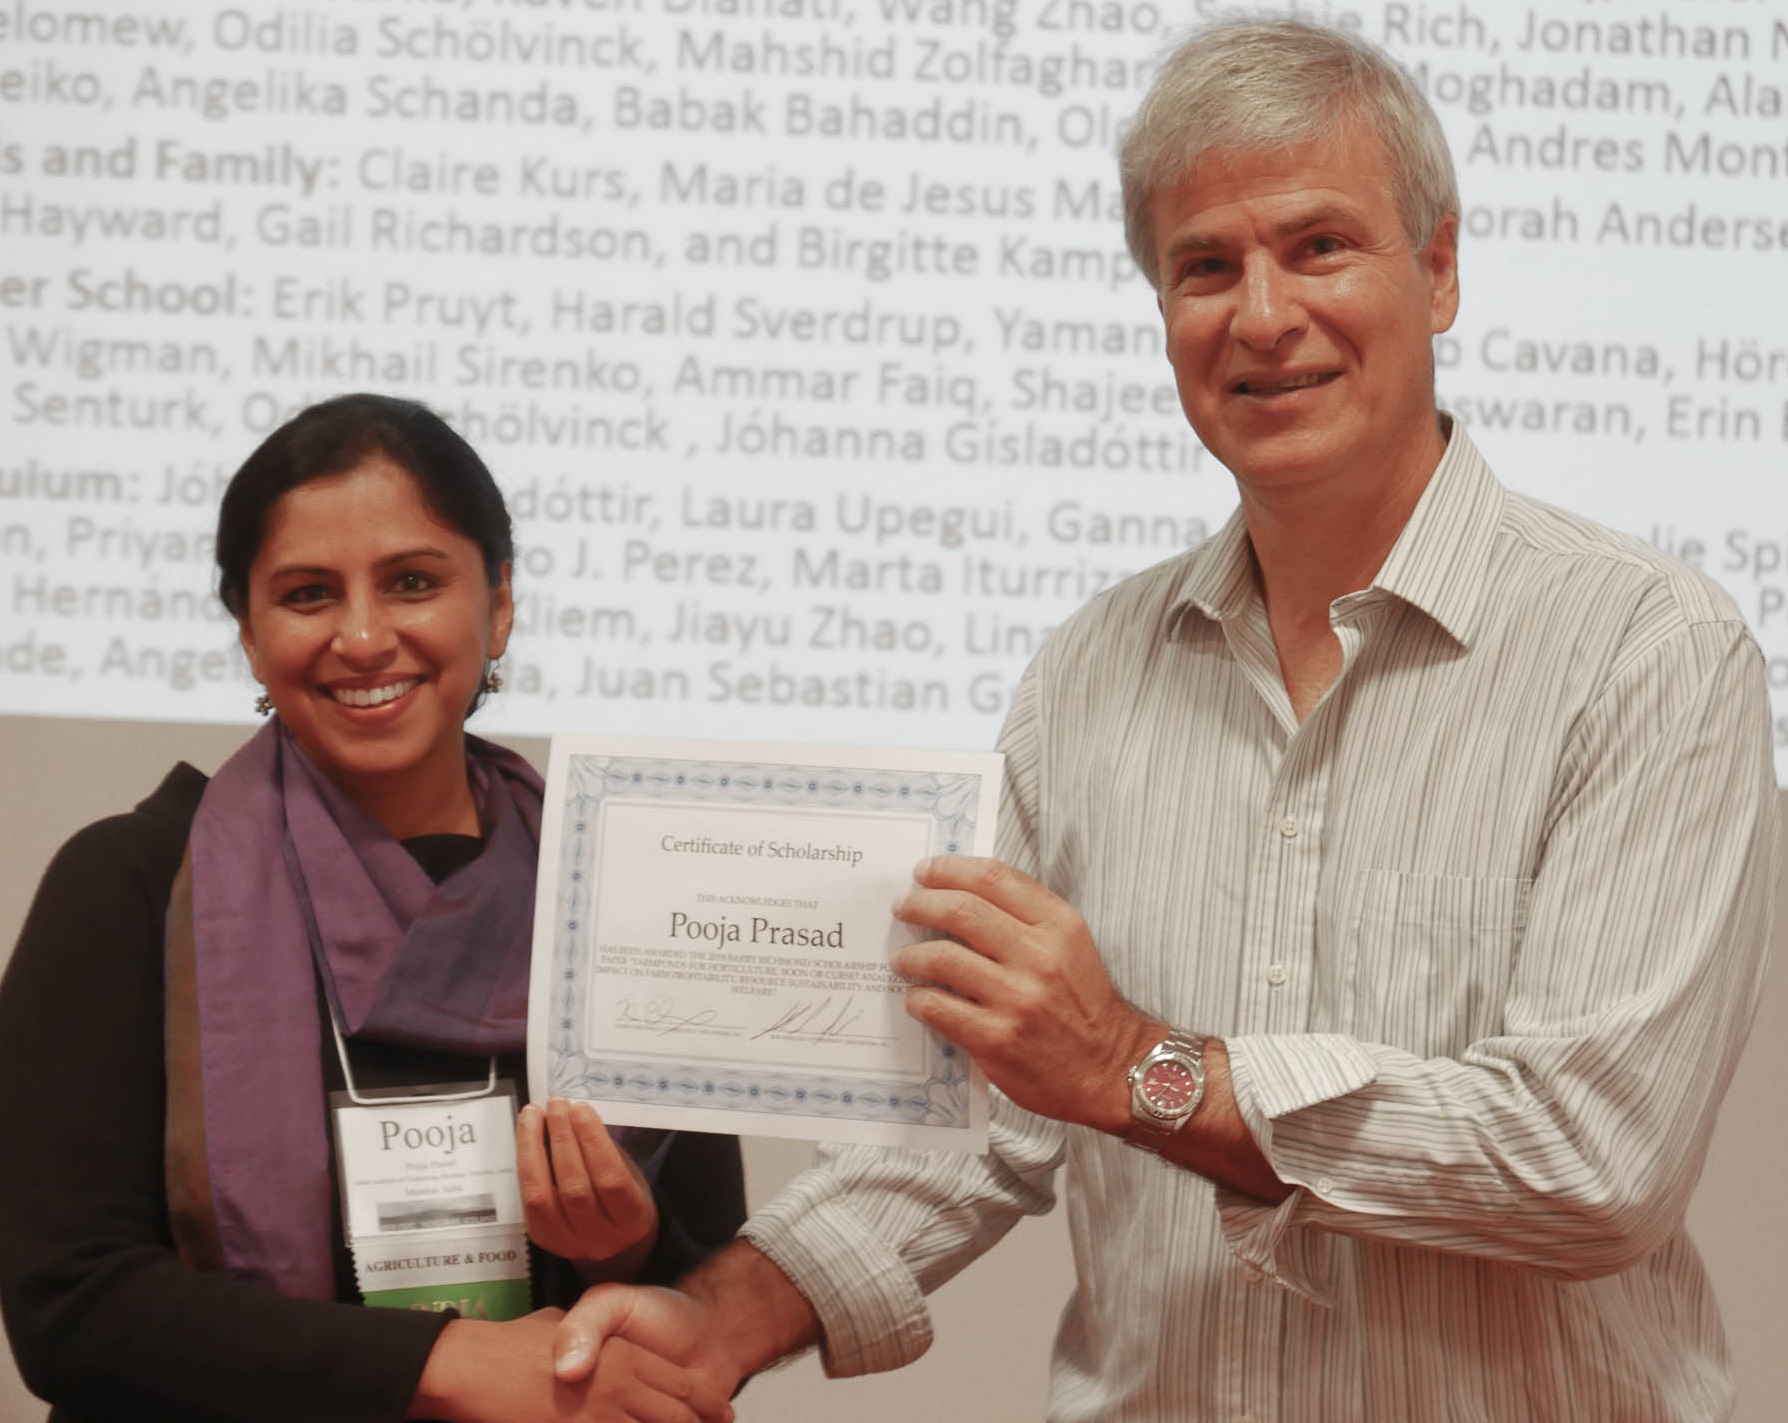 Pooja Prasad accepts Scholarship Award from Karim Chichakly